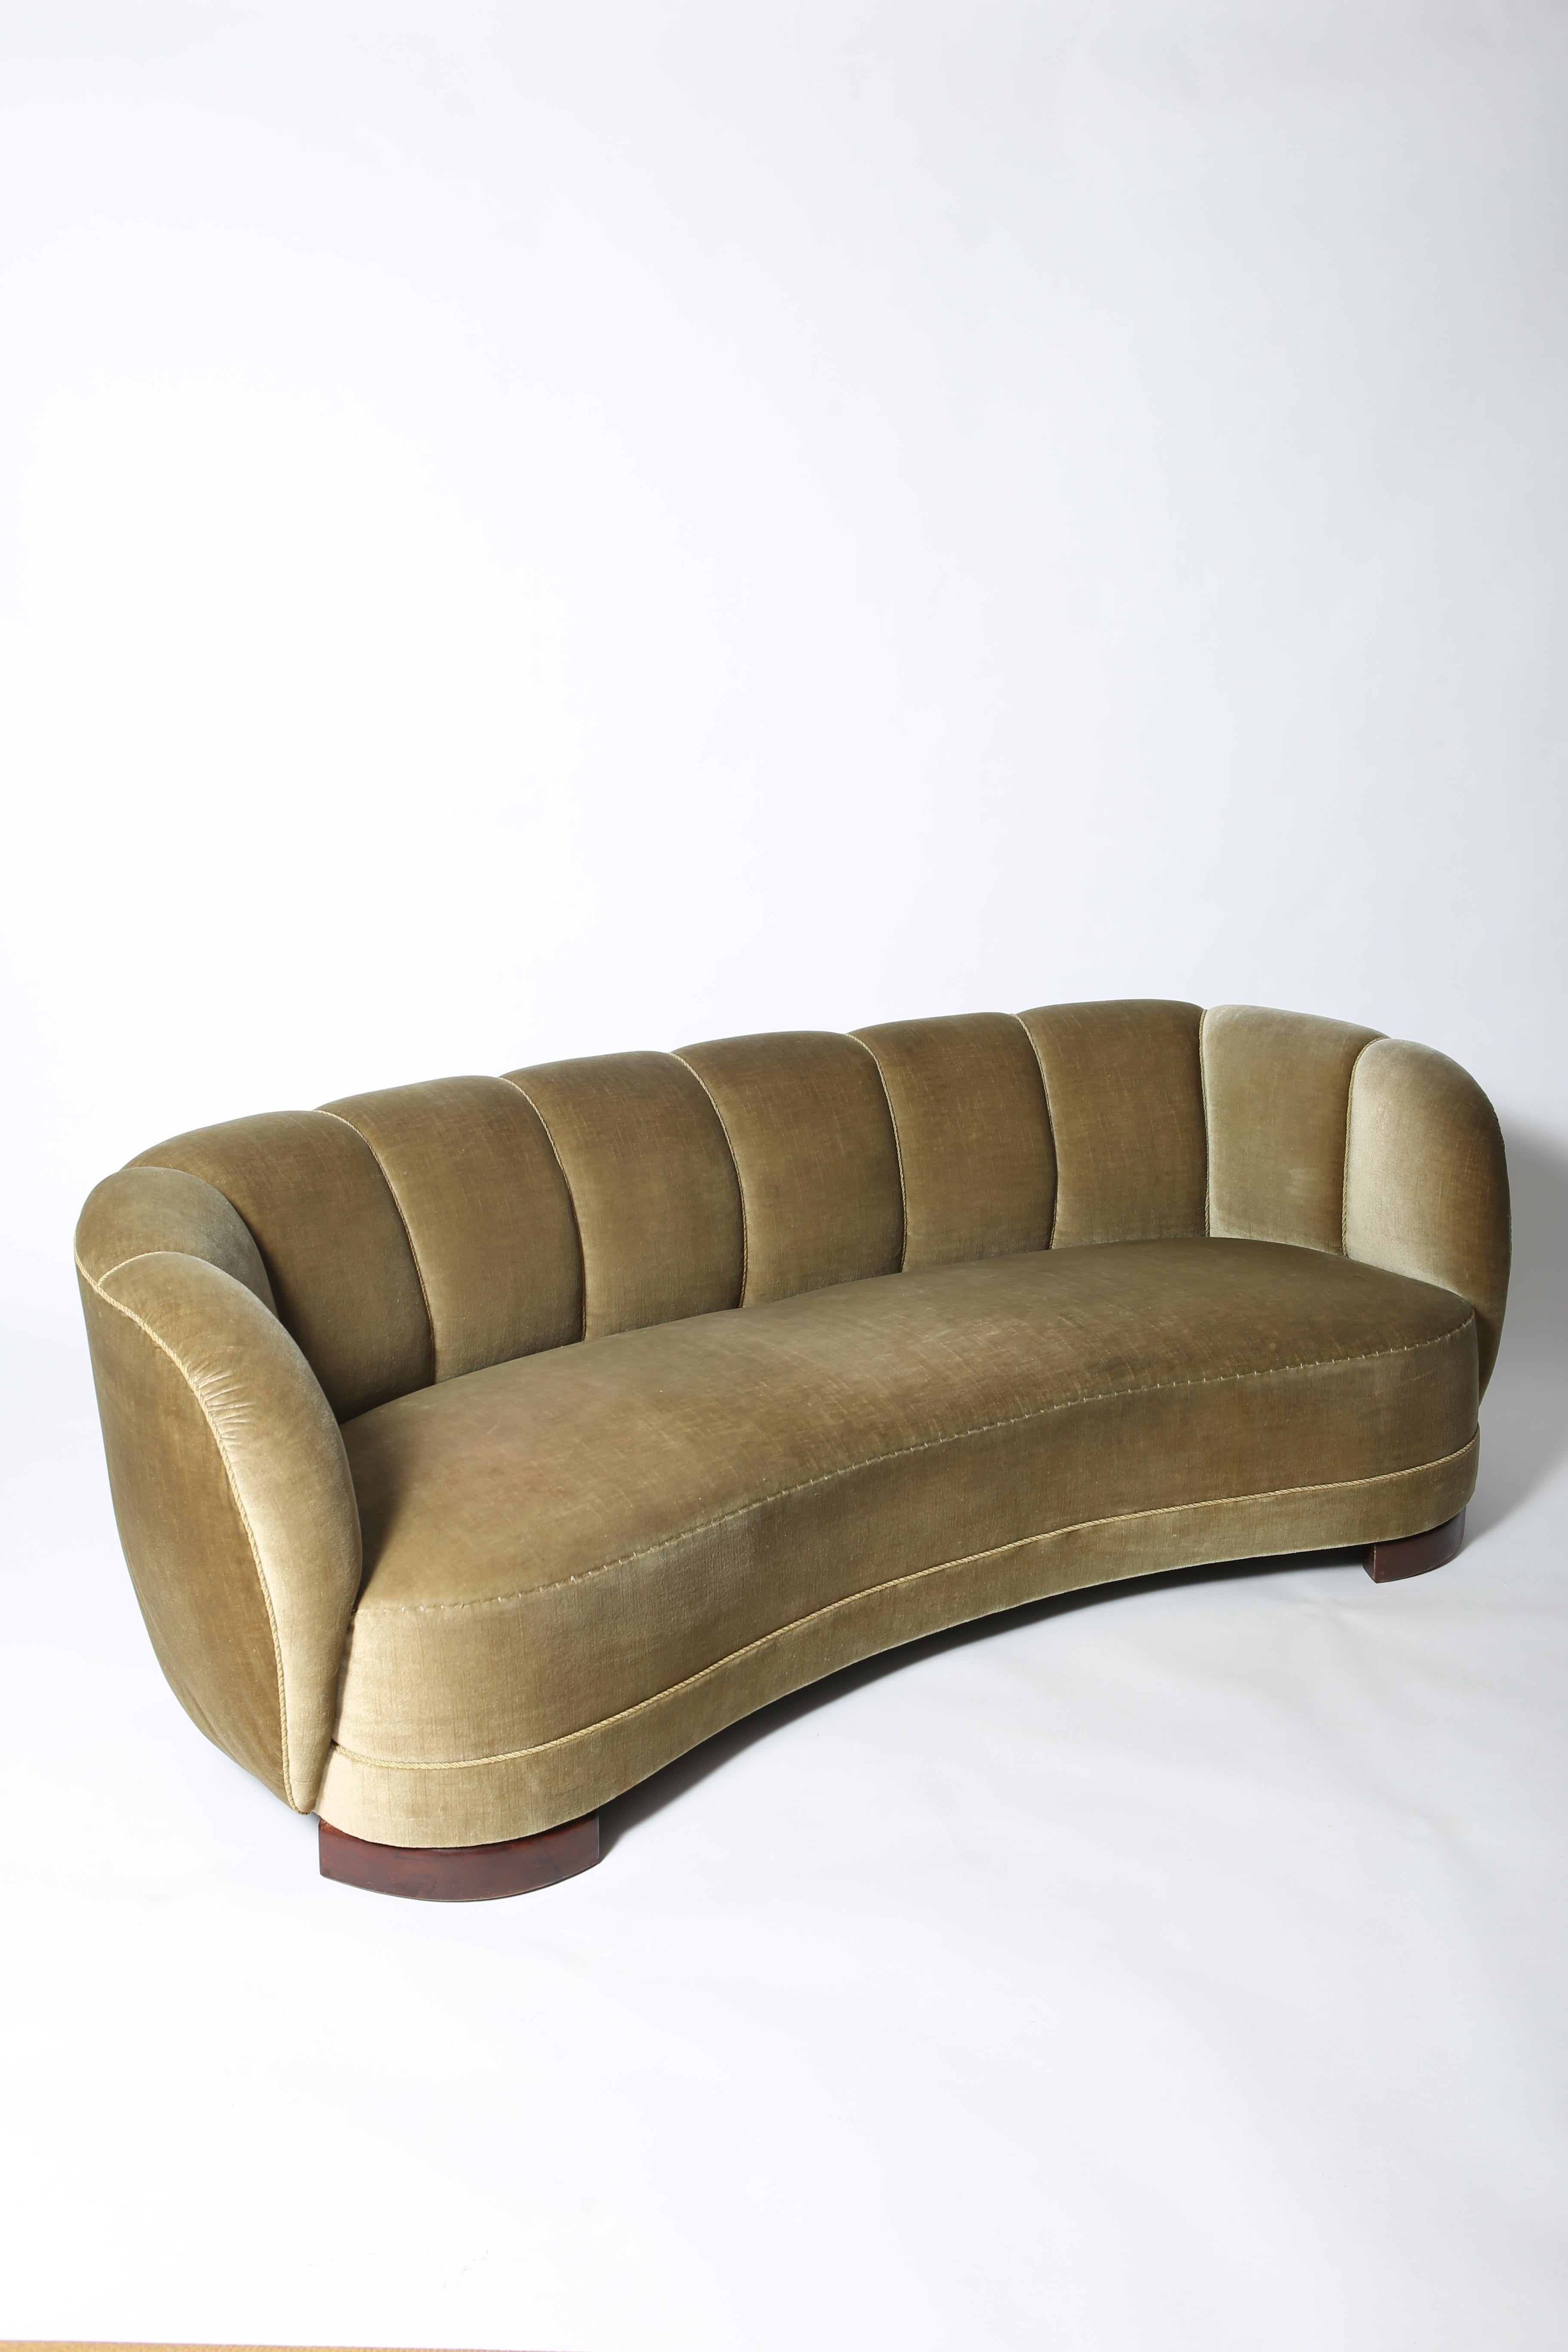 Mid-20th Century 1940’s Danish Cabinetmaker Curved “Banana” Sofa